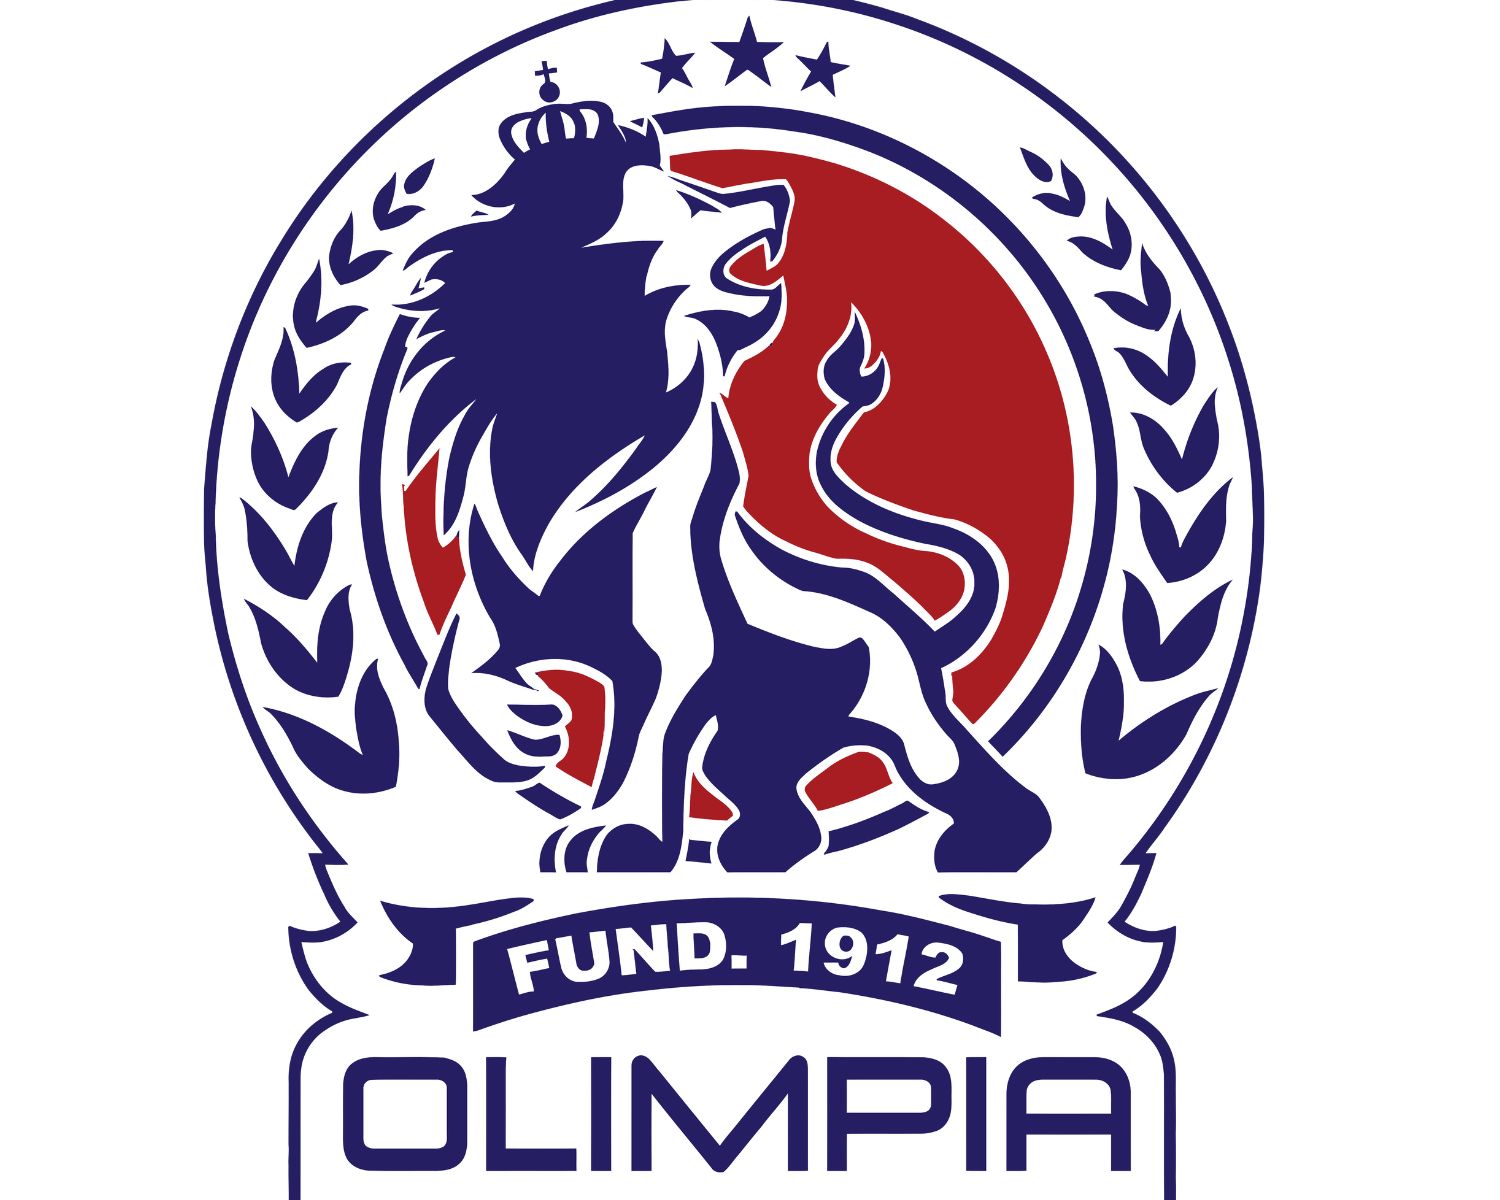 club-olimpia-10-football-club-facts